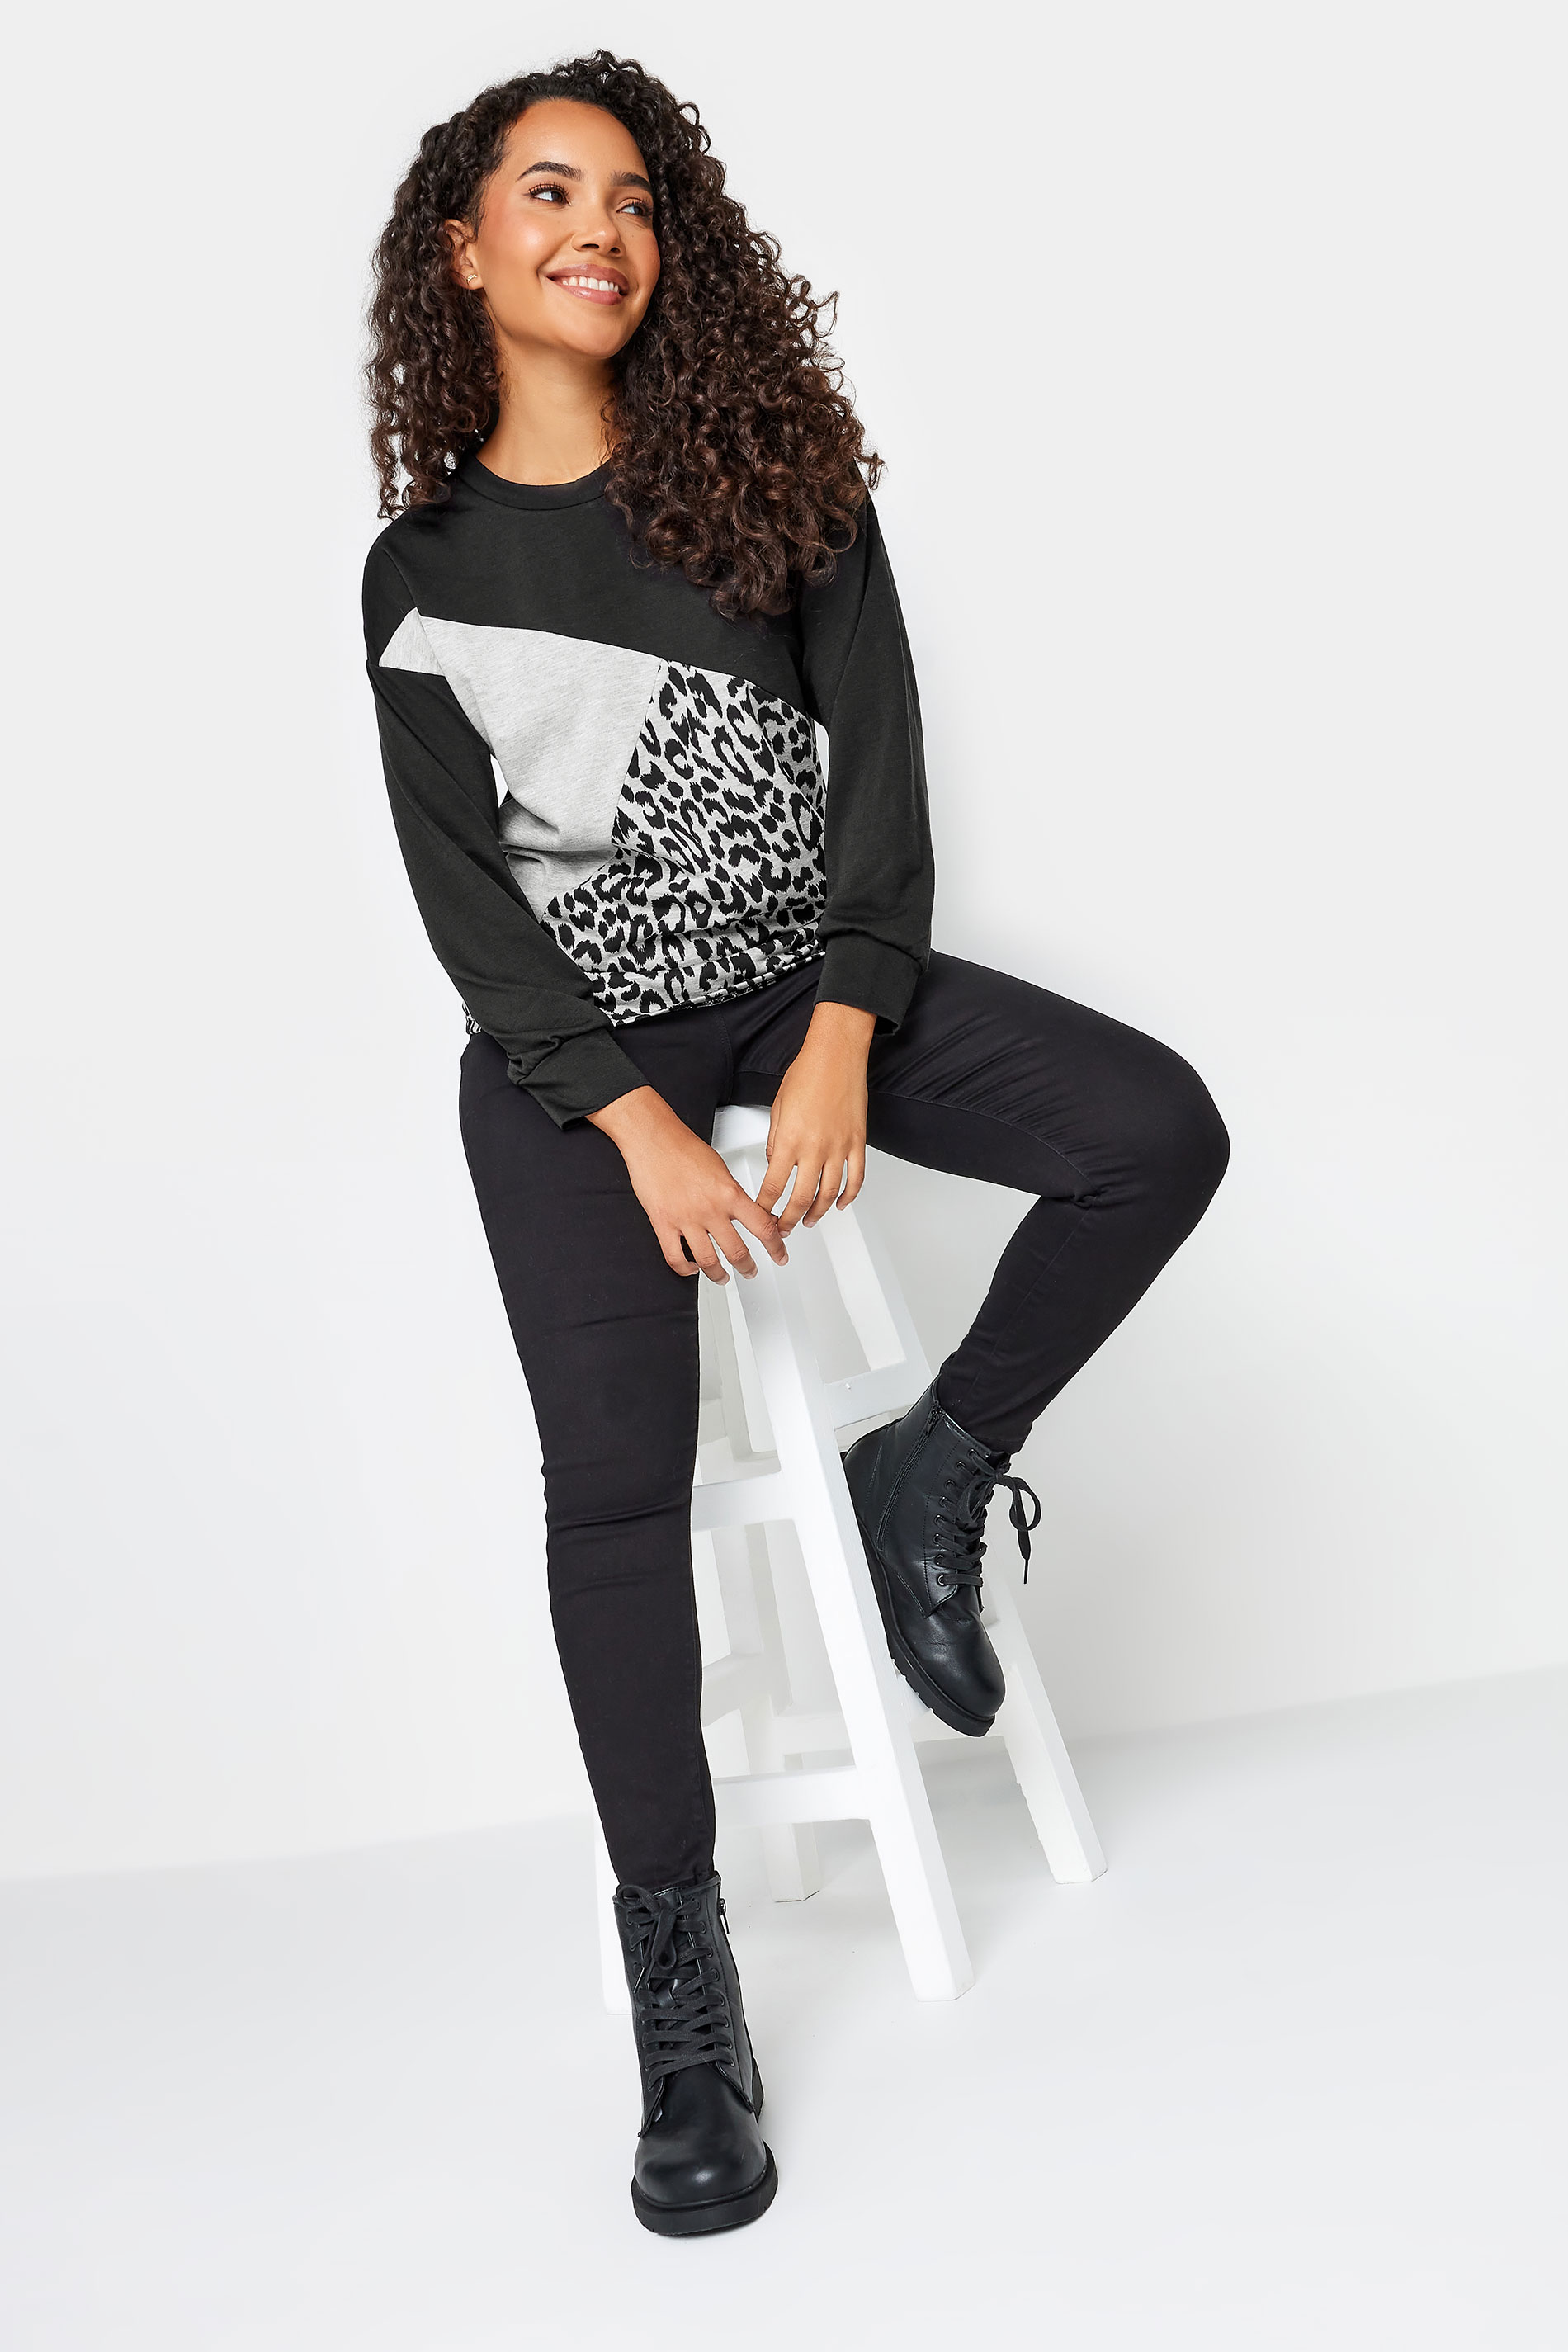 M&Co Grey Animal Print Colourblock Sweatshirt | M&Co 2